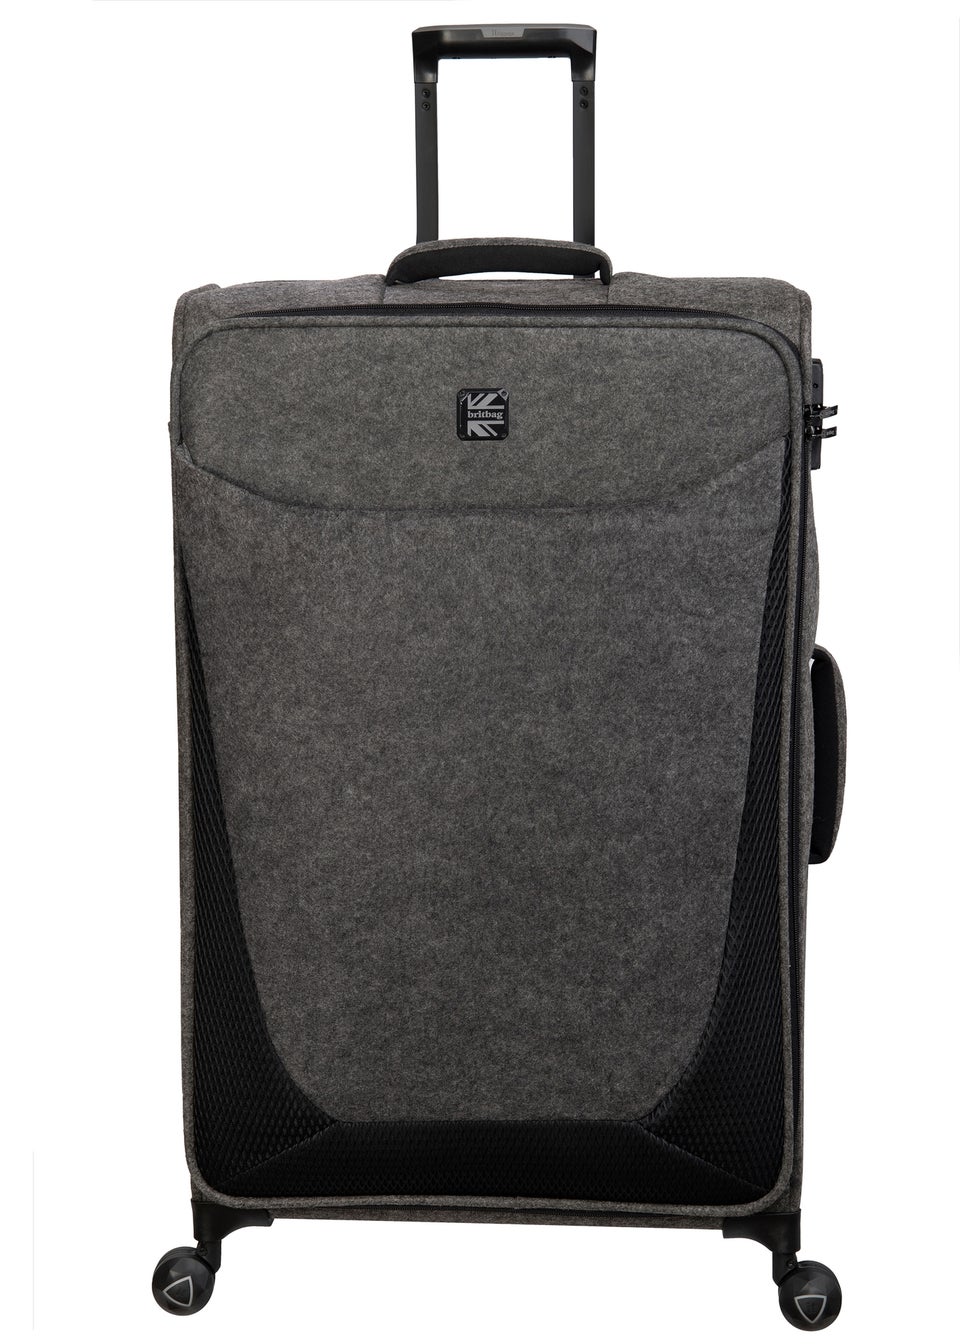 BritBag Perissa Medium Tech Grey Suitcase with TSA Lock